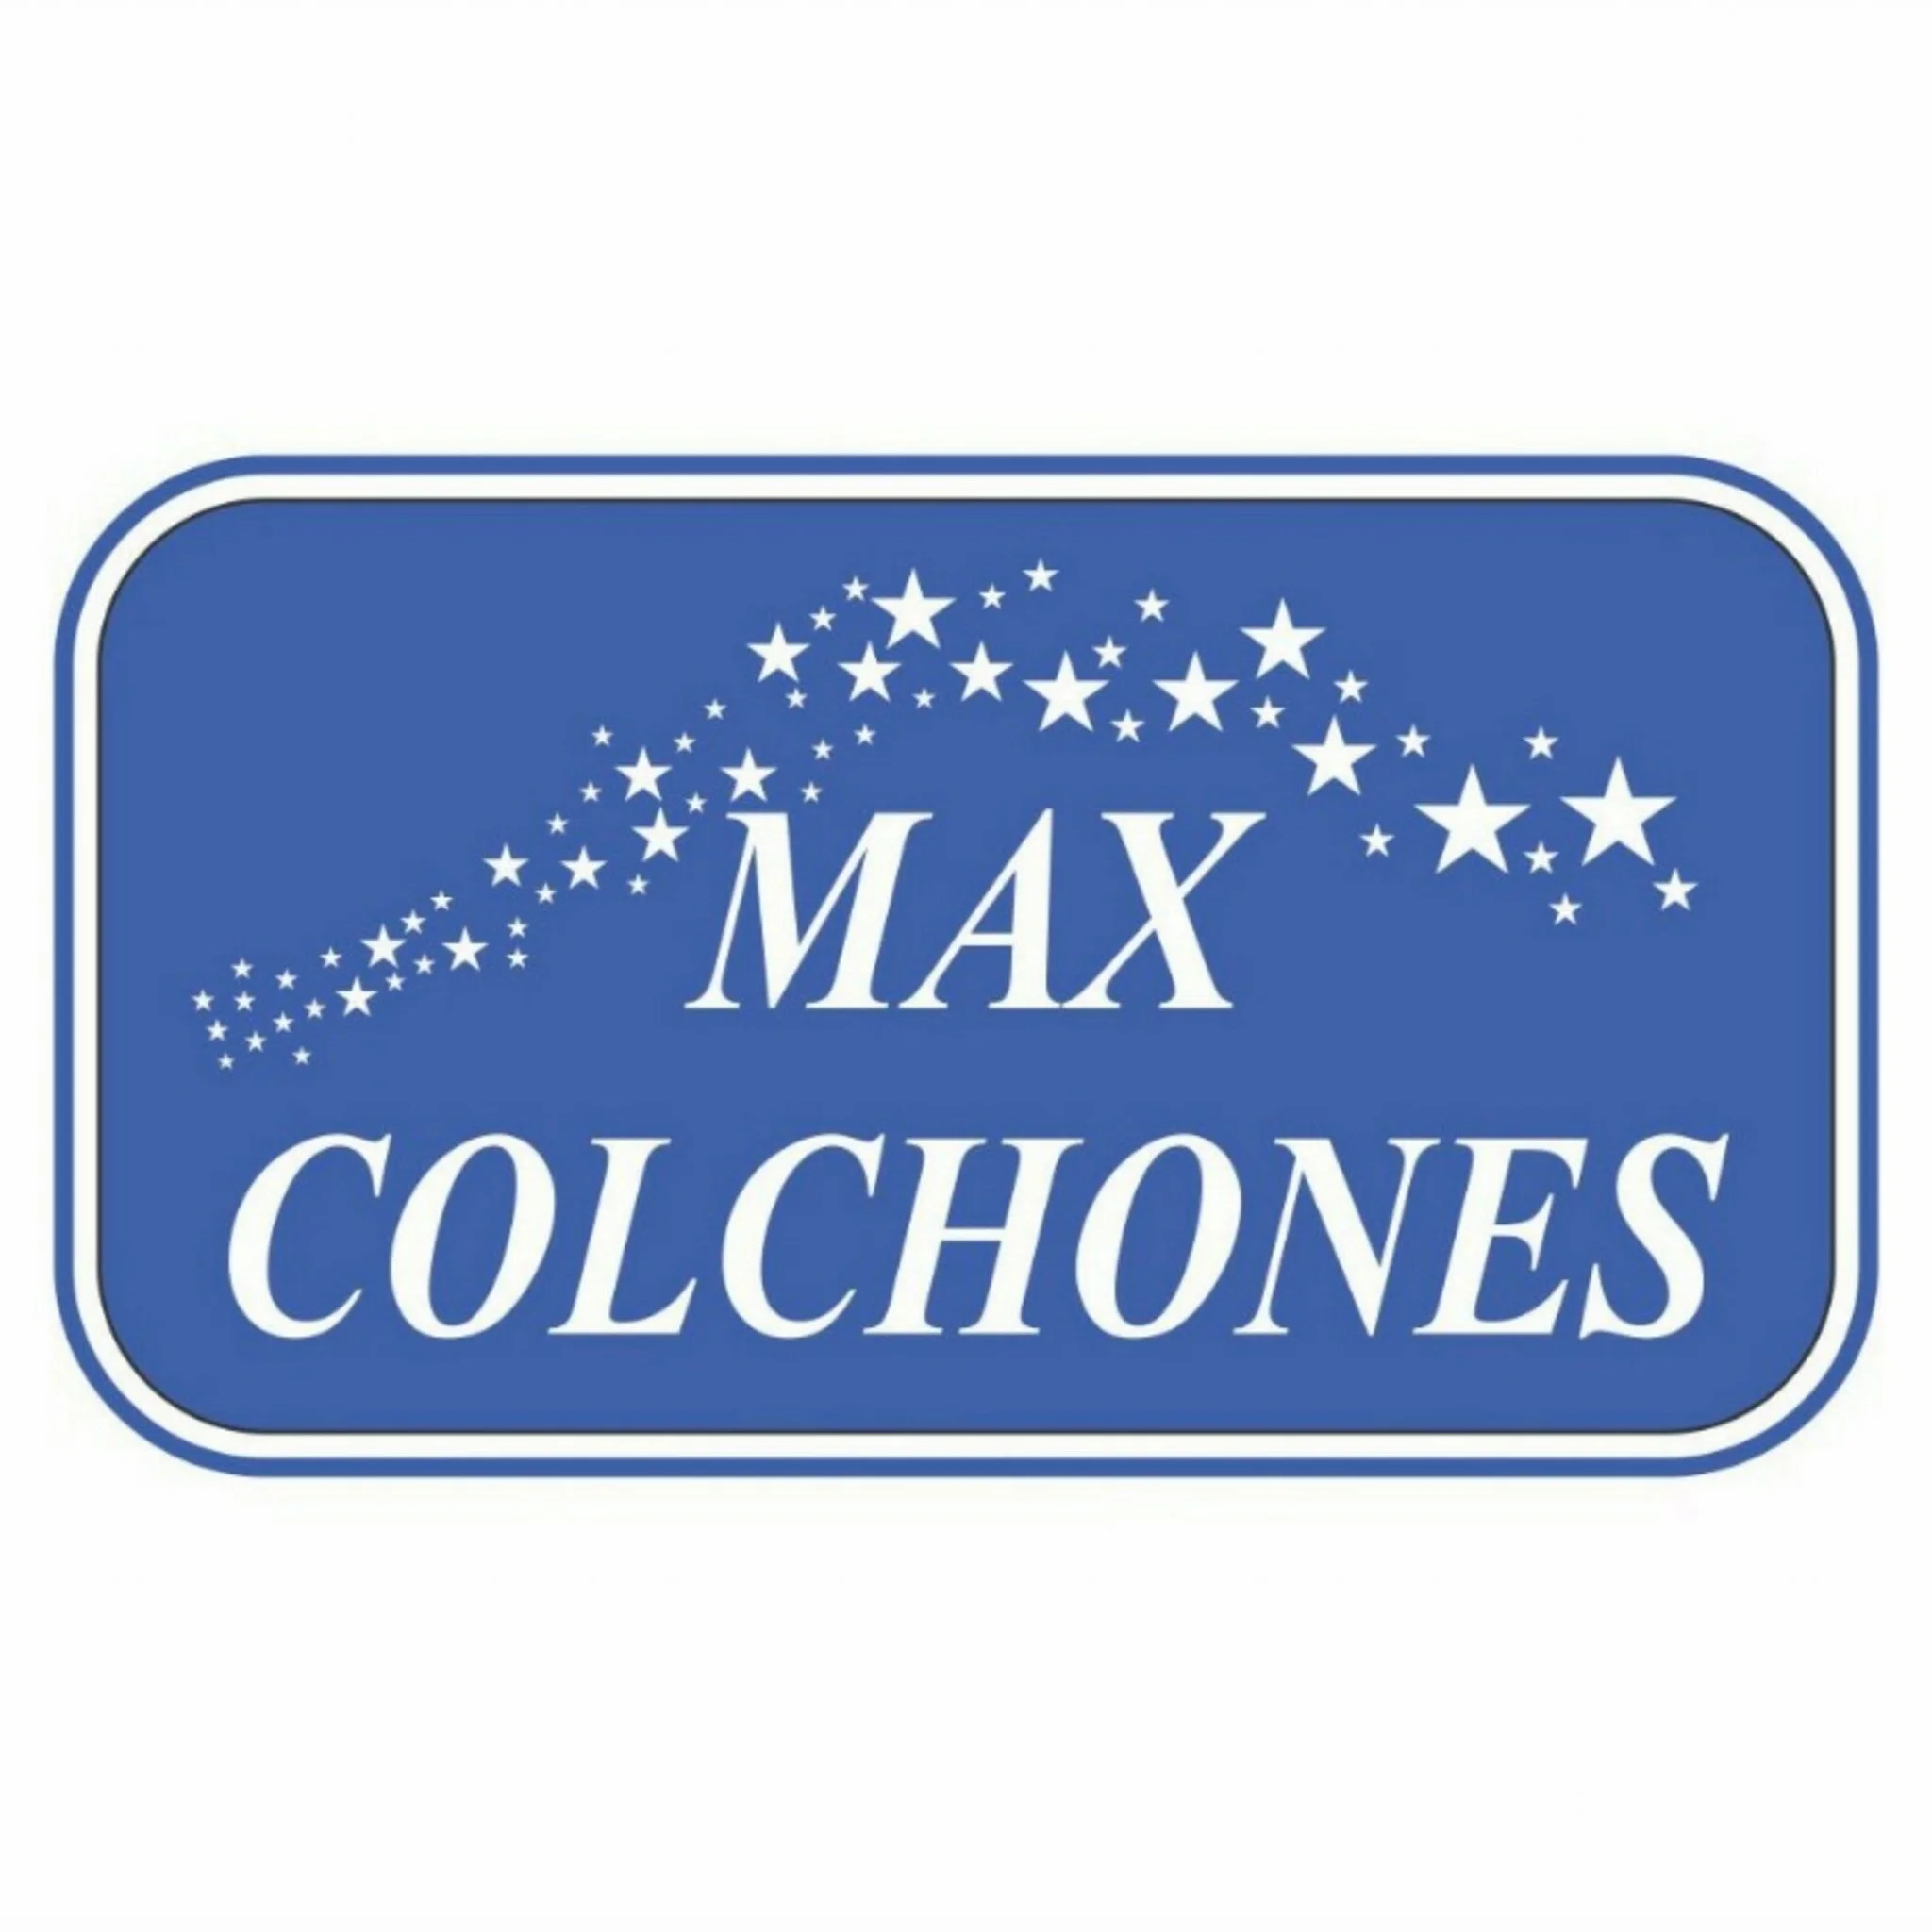 MAXCOLCHONES-4322